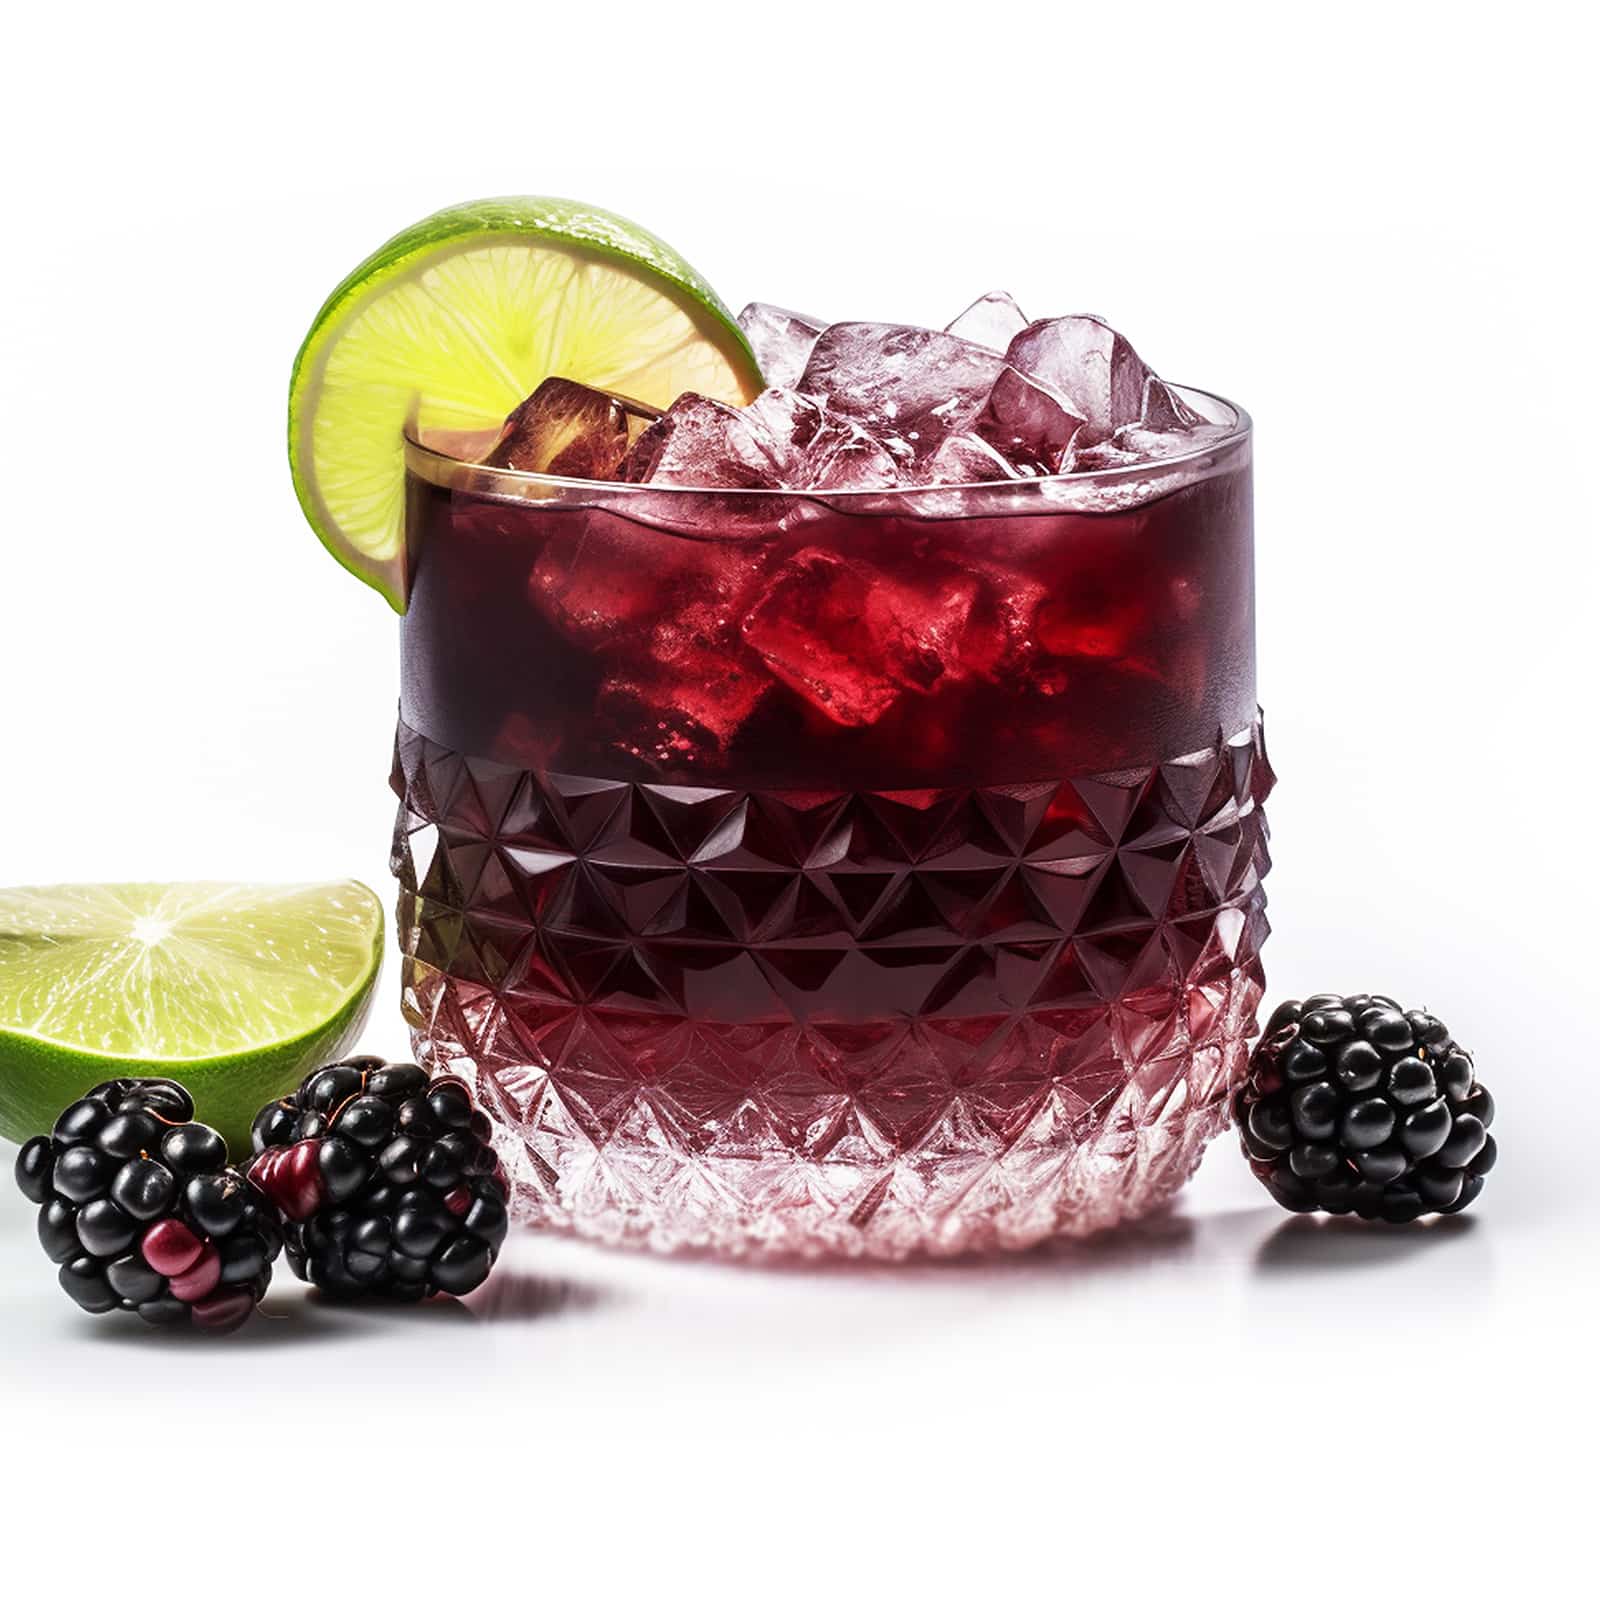 Blackberry Margarita - 1.5oz Tequila, .75oz Blackberry Syrup, .75oz Lime Juice